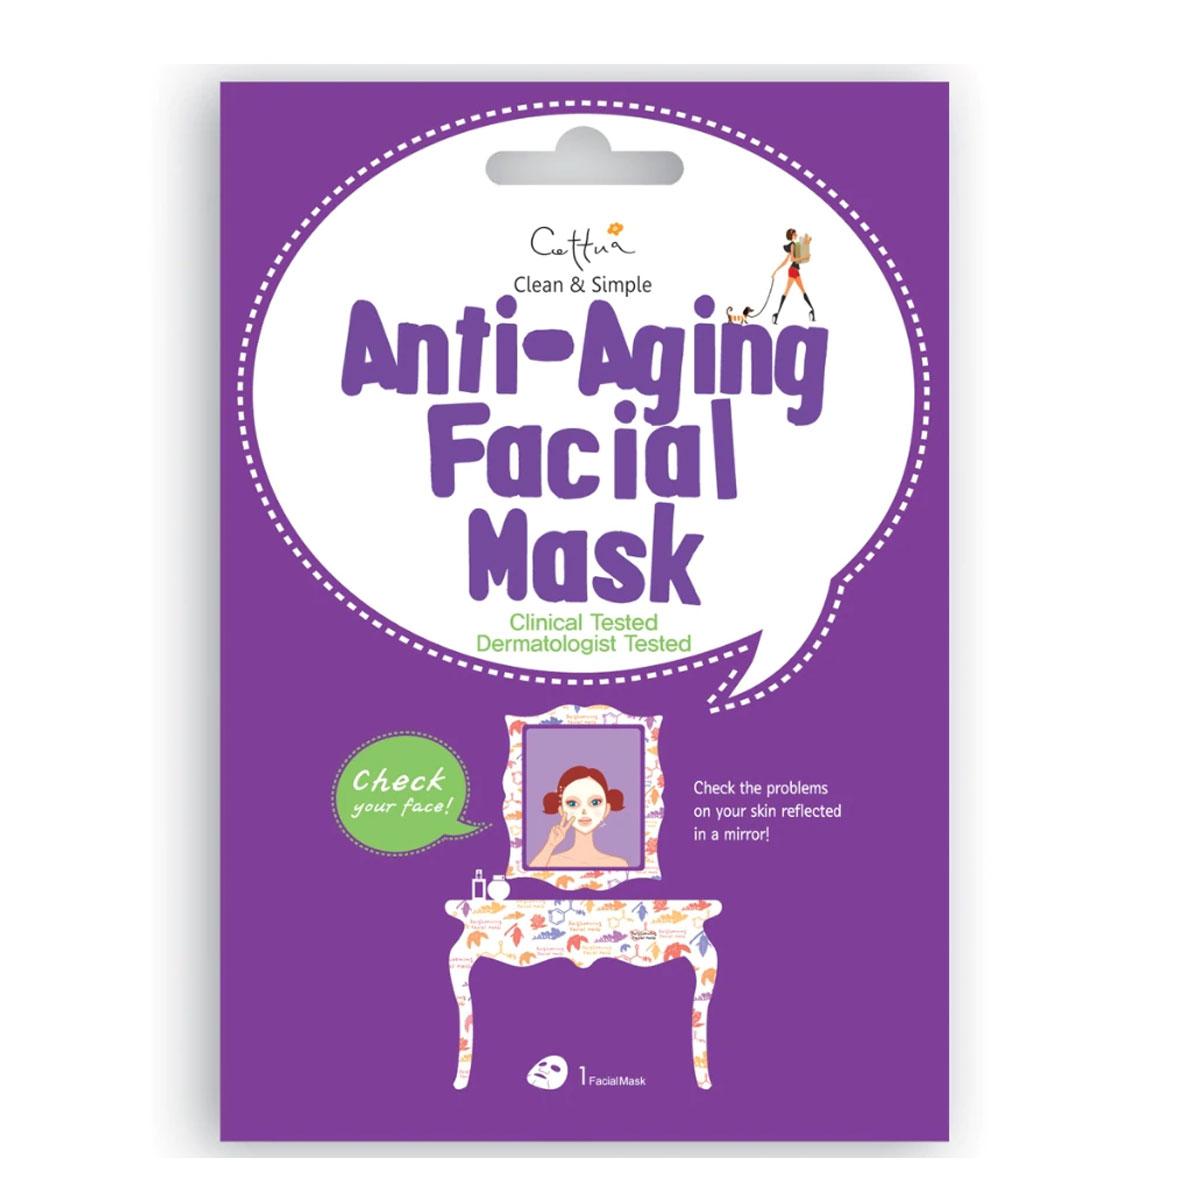 ماسک ضد پیری کره ای - Anti ageing fecial mask